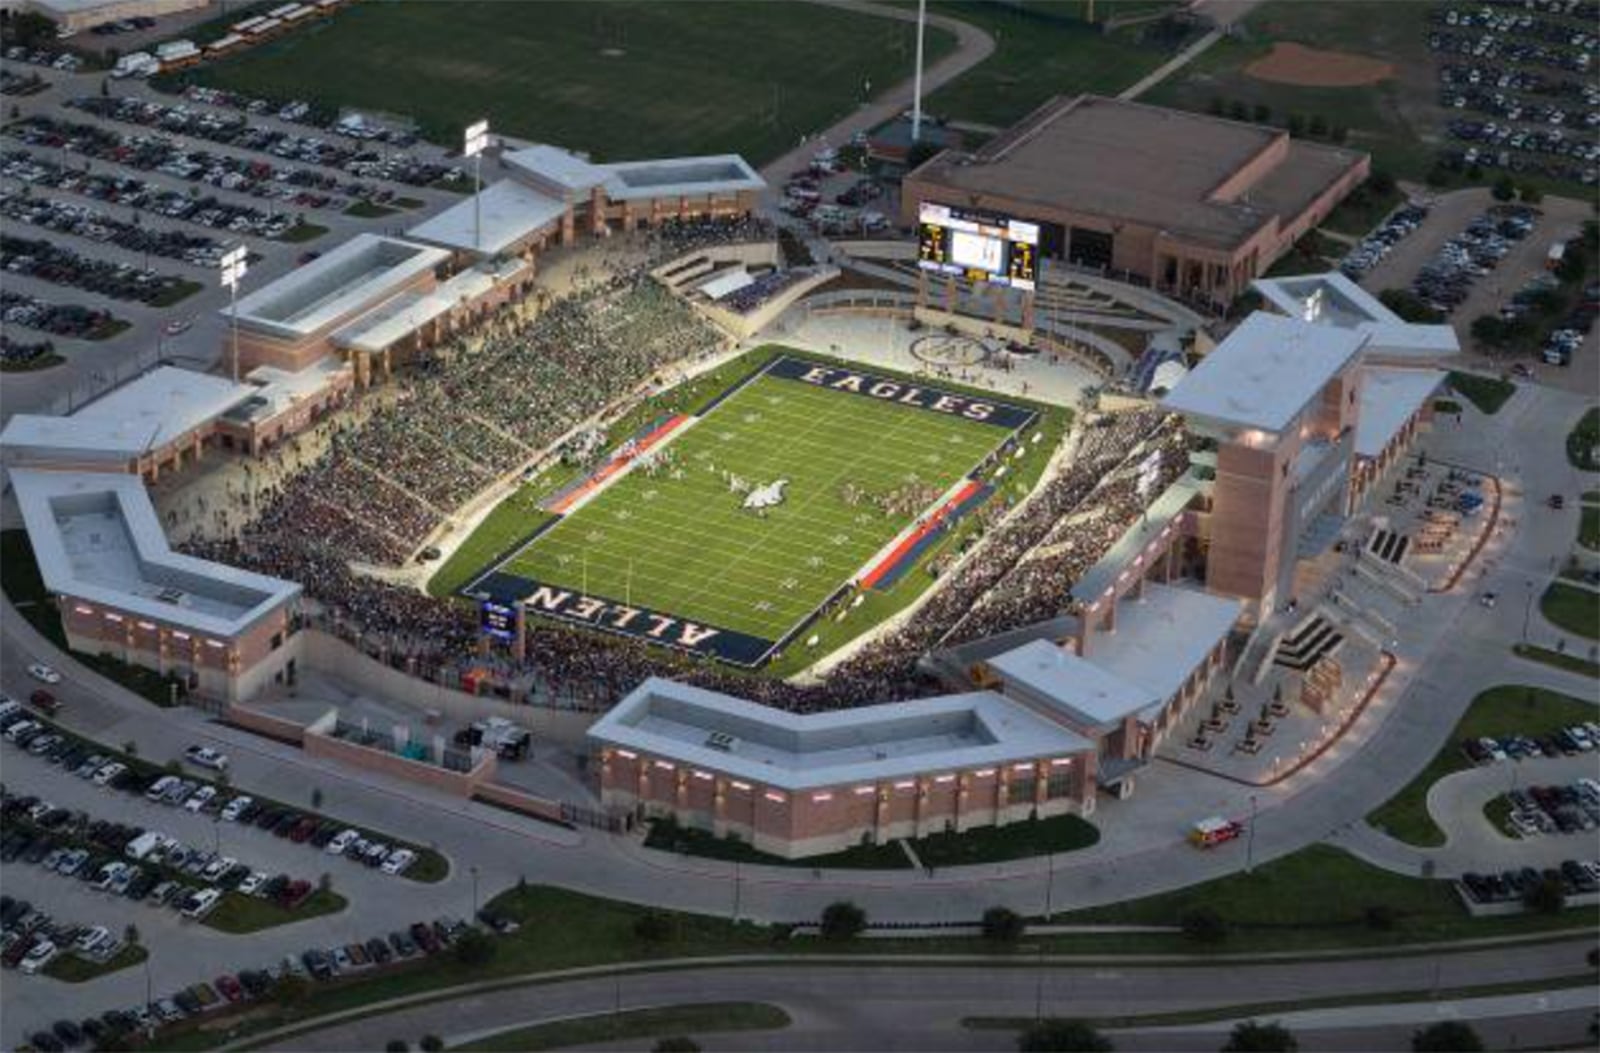 Texas high school spends 60 million on new football stadium, feeds